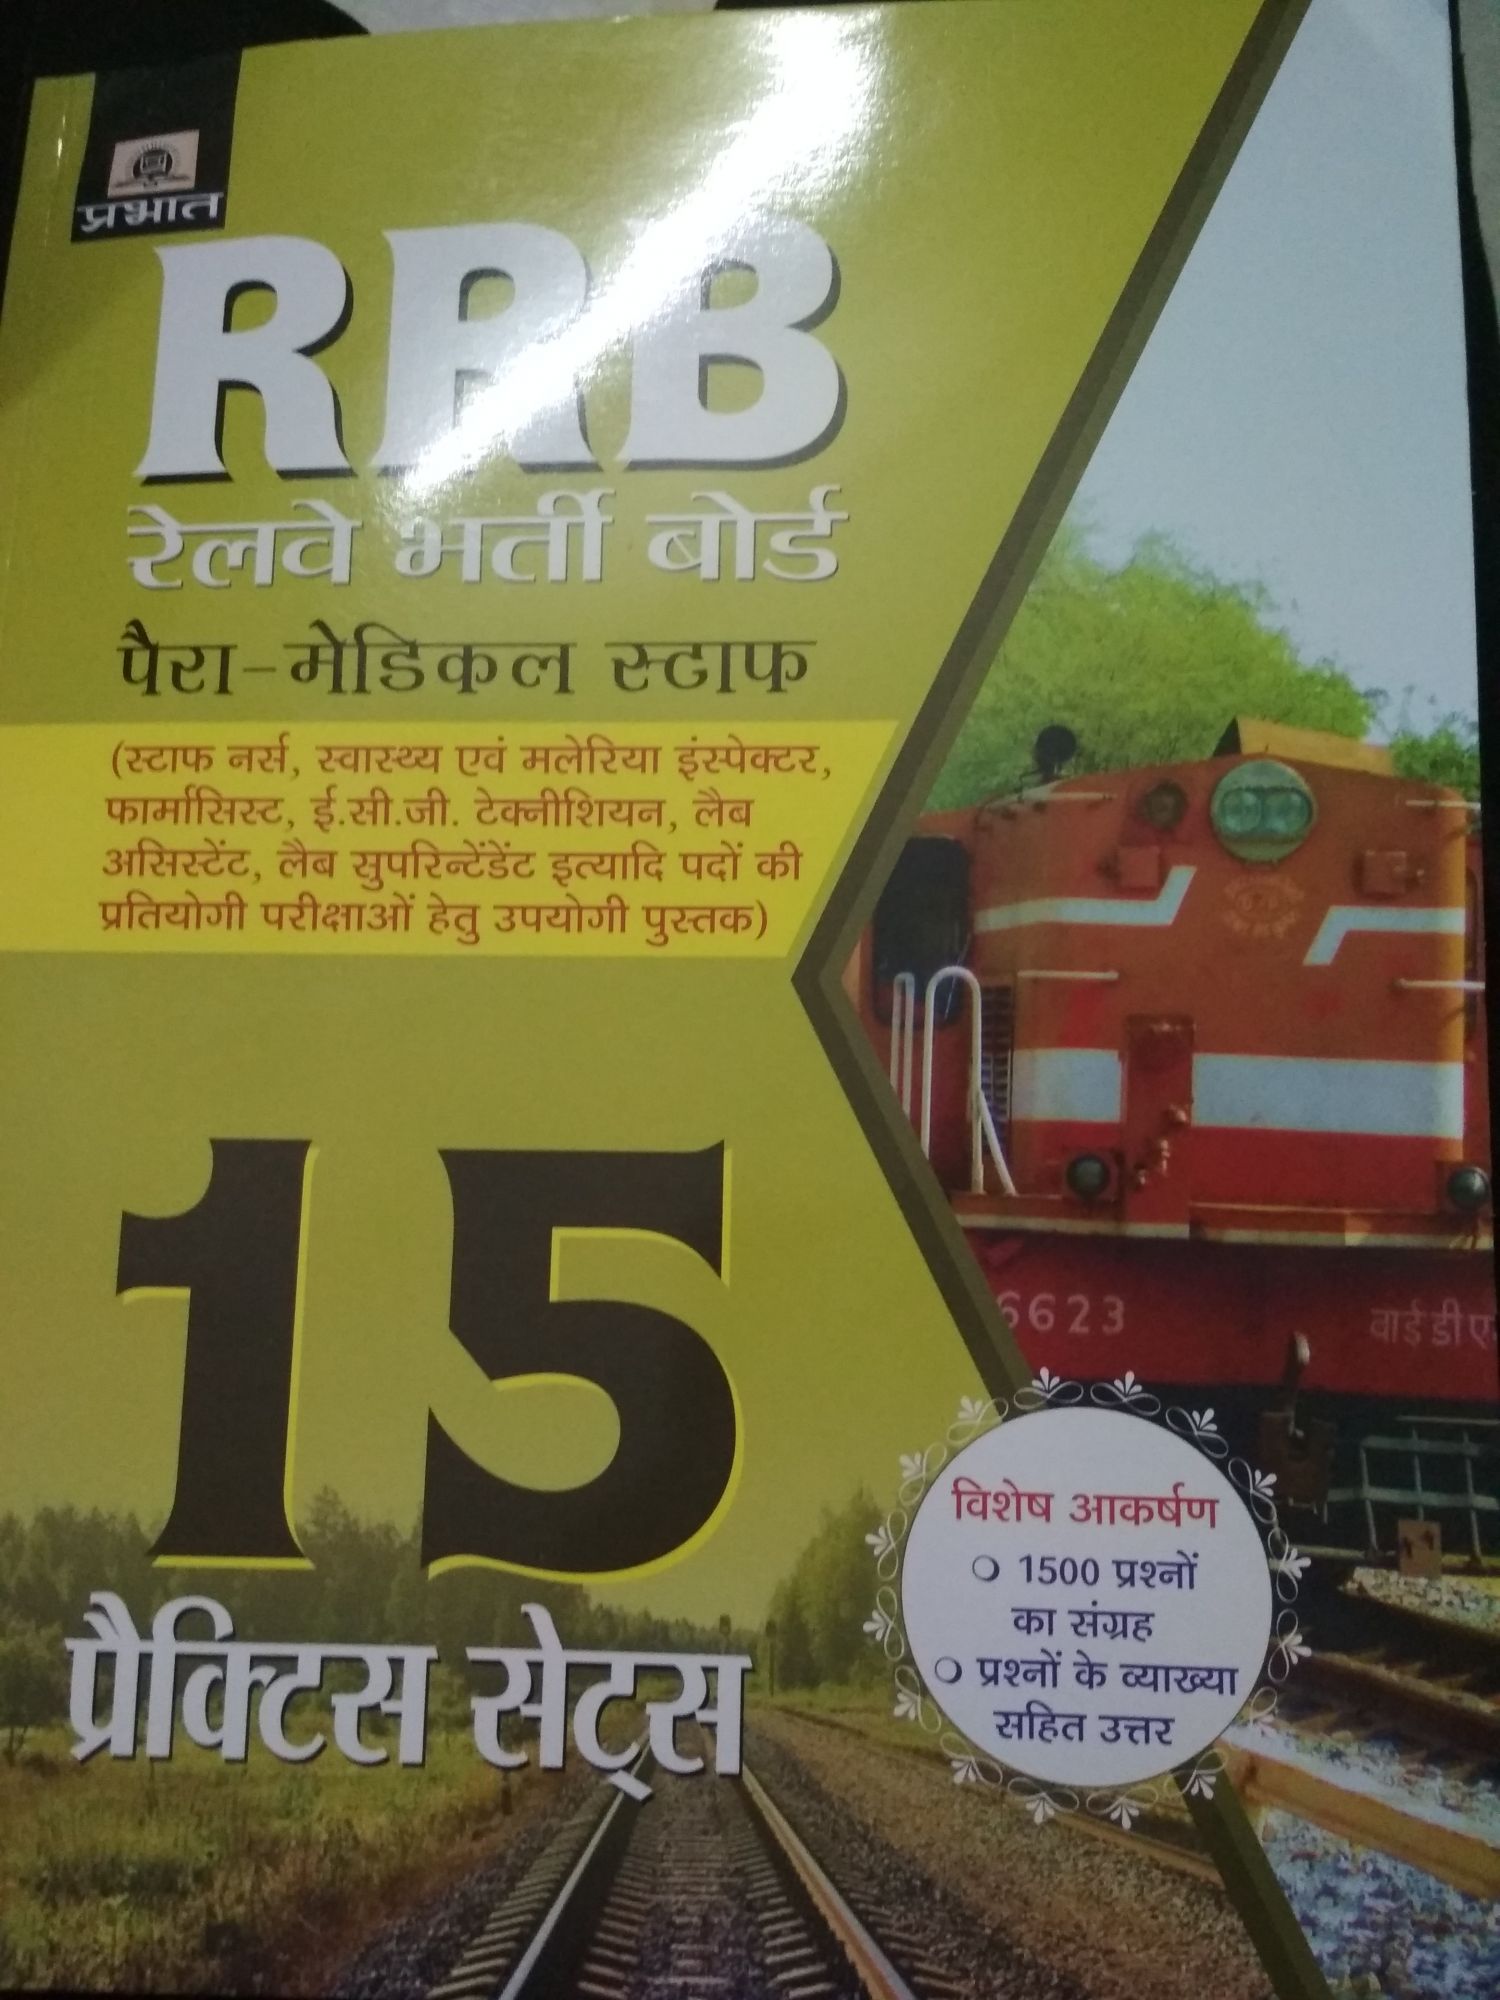 Prabhat Rrb Rilway 15 Practice Teat Papers  in hindi medium